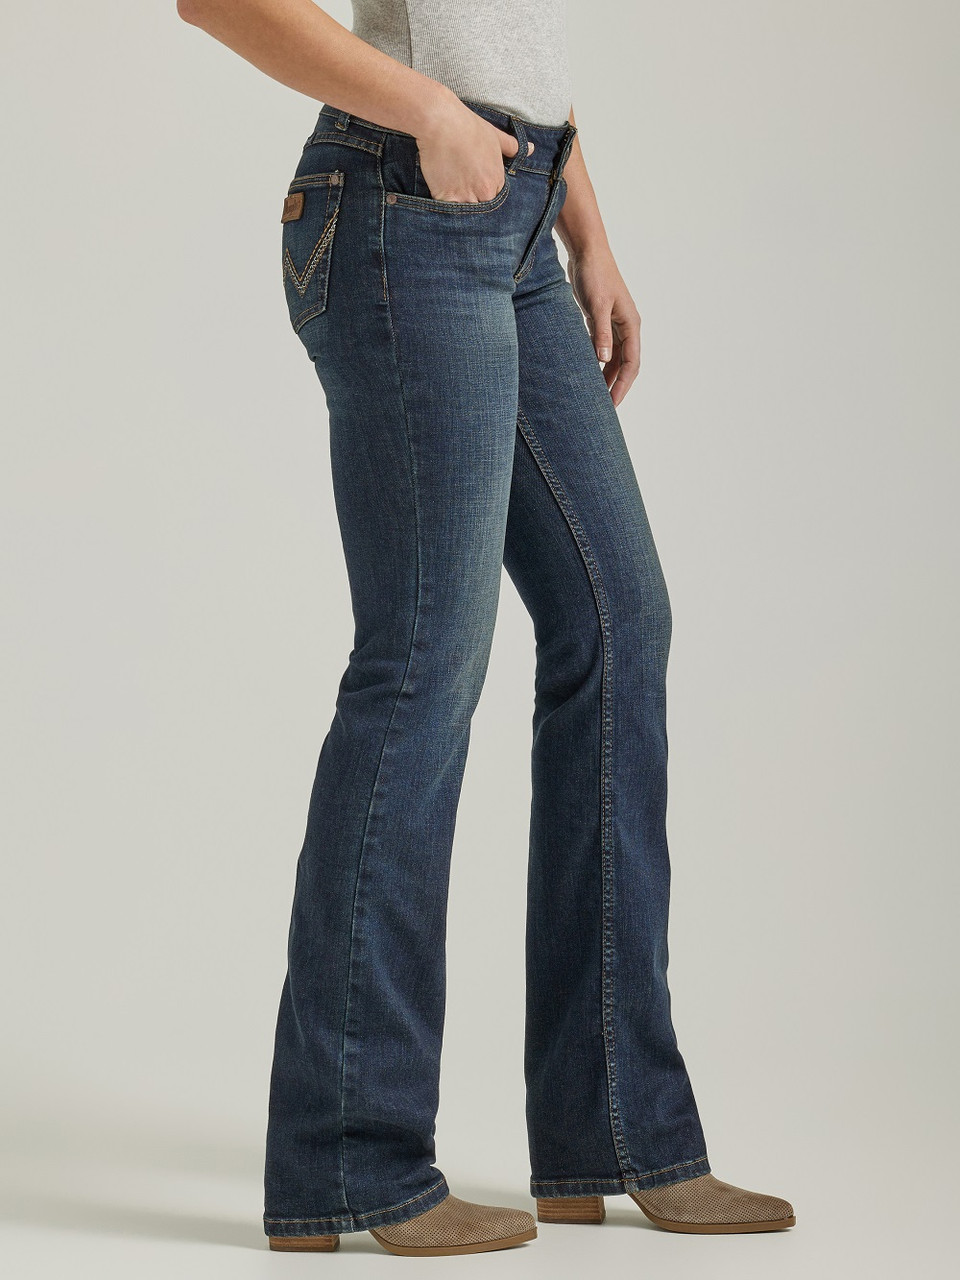 EARL Jeans Vintage Boot Cut Womens 8 Denim Pants Ladies Bottoms Bootcut 8M  8 M